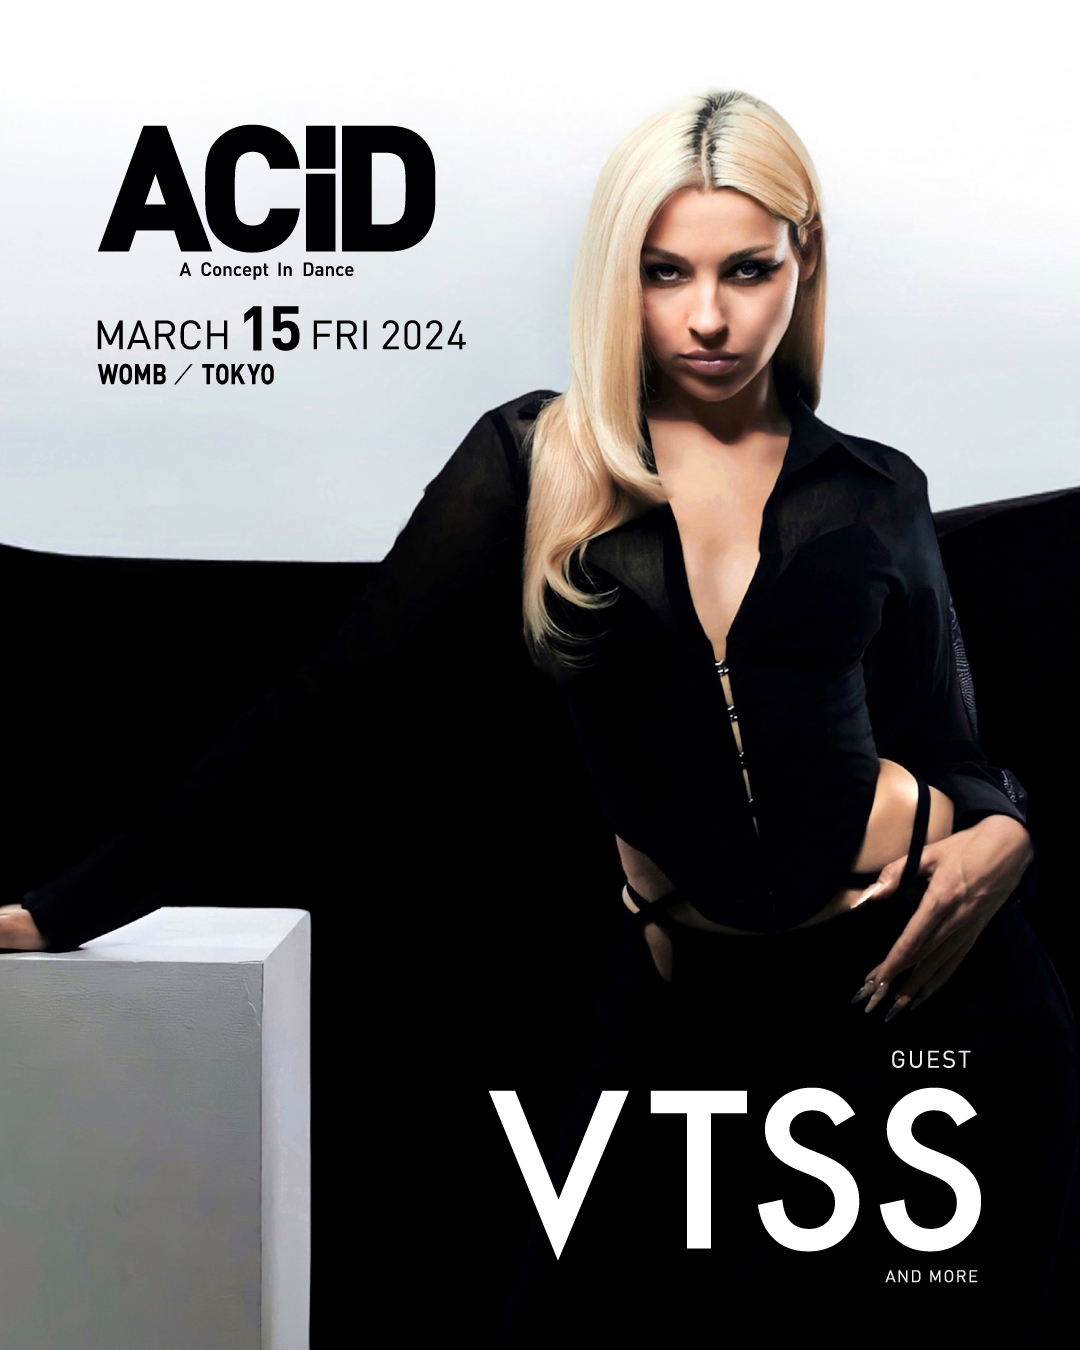 ACiD: A Concept in Dance VTSS